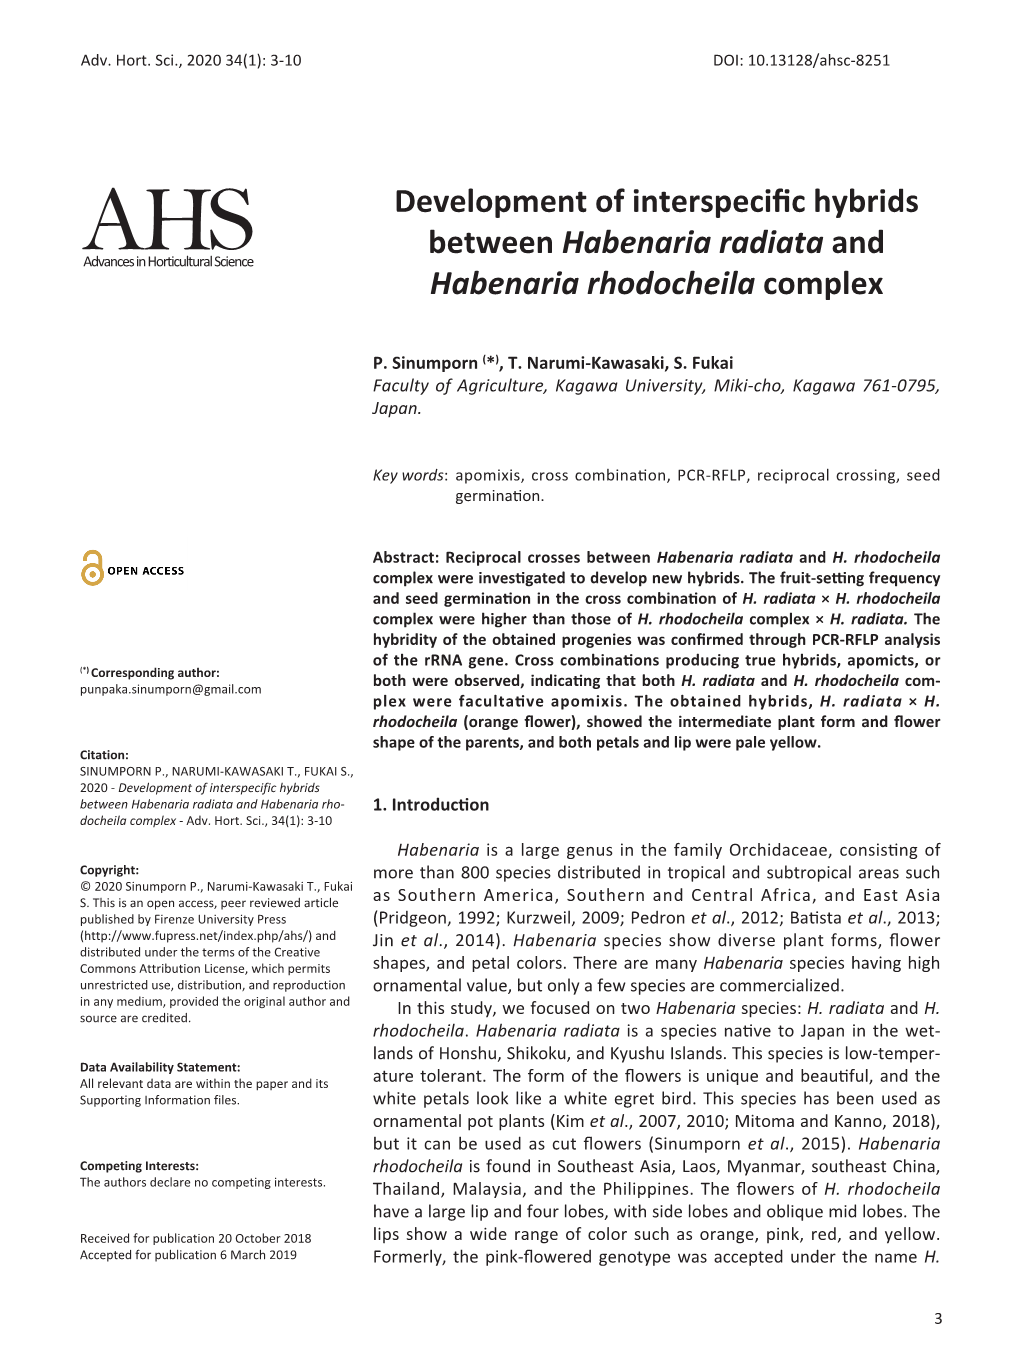 Development of Interspecific Hybrids Between Habenaria Radiata and Habenaria Rho‐ 1